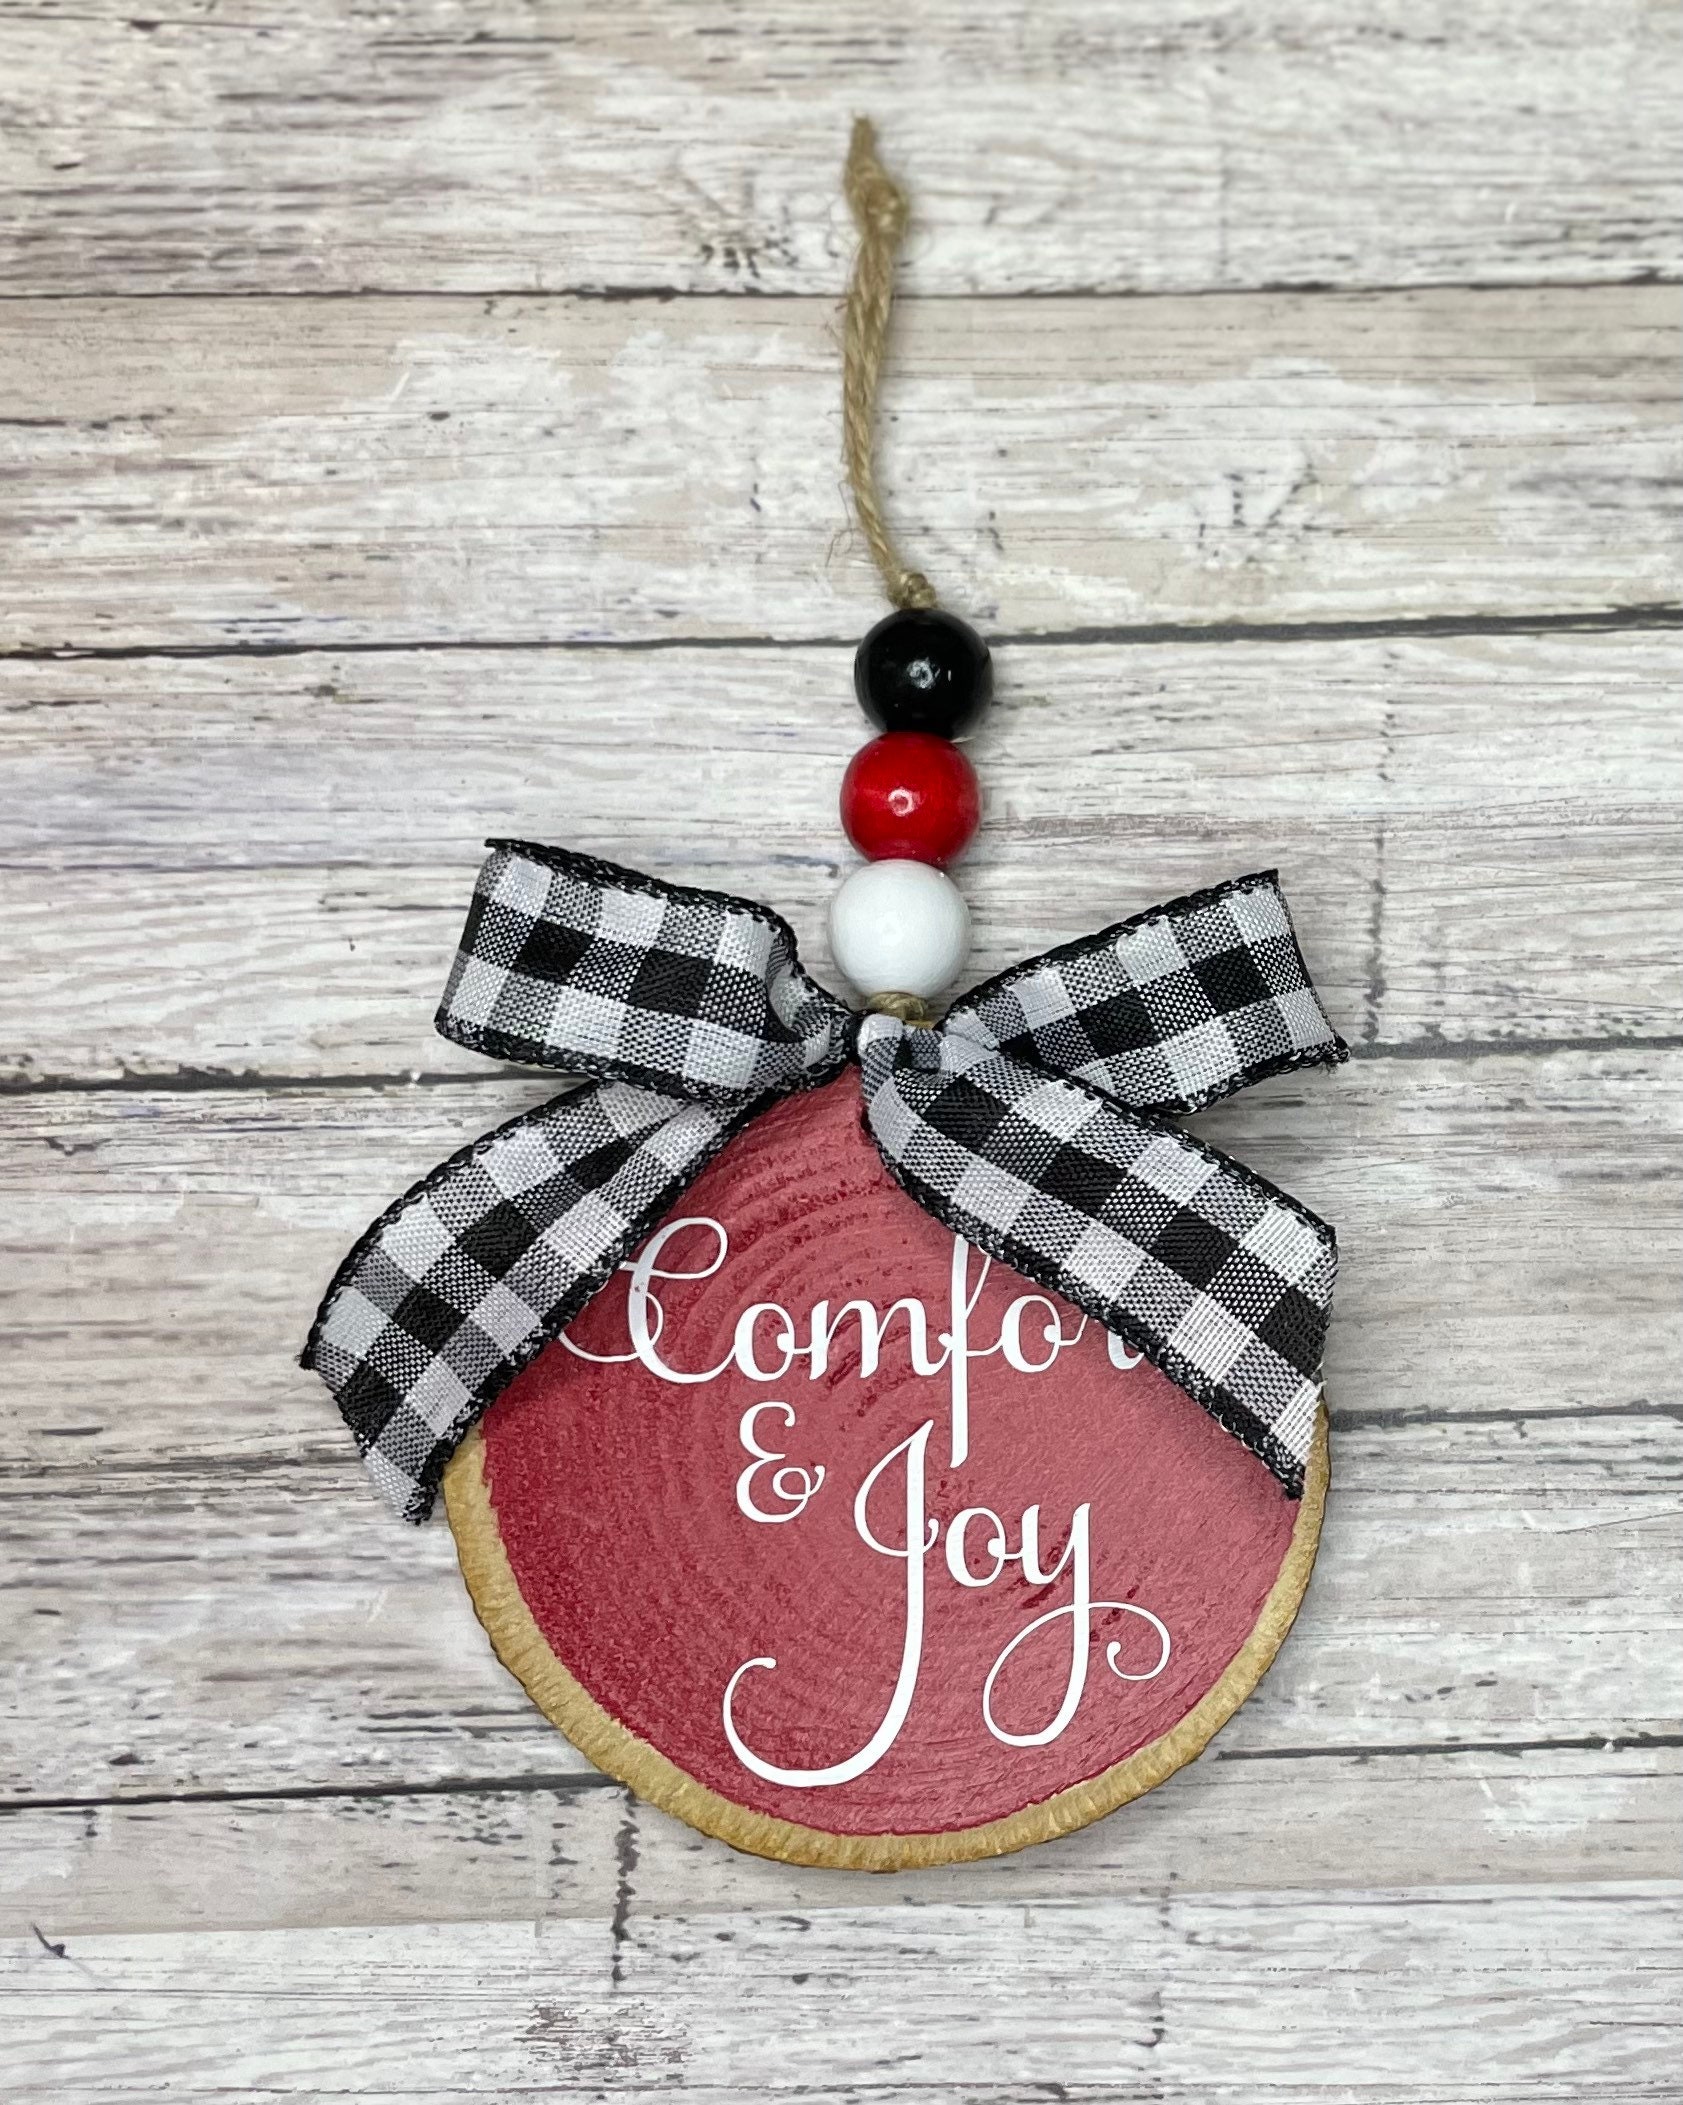 Farmhouse Christmas Ornaments Set of 3  Red White Wood Slices - Believe  Noel Joy